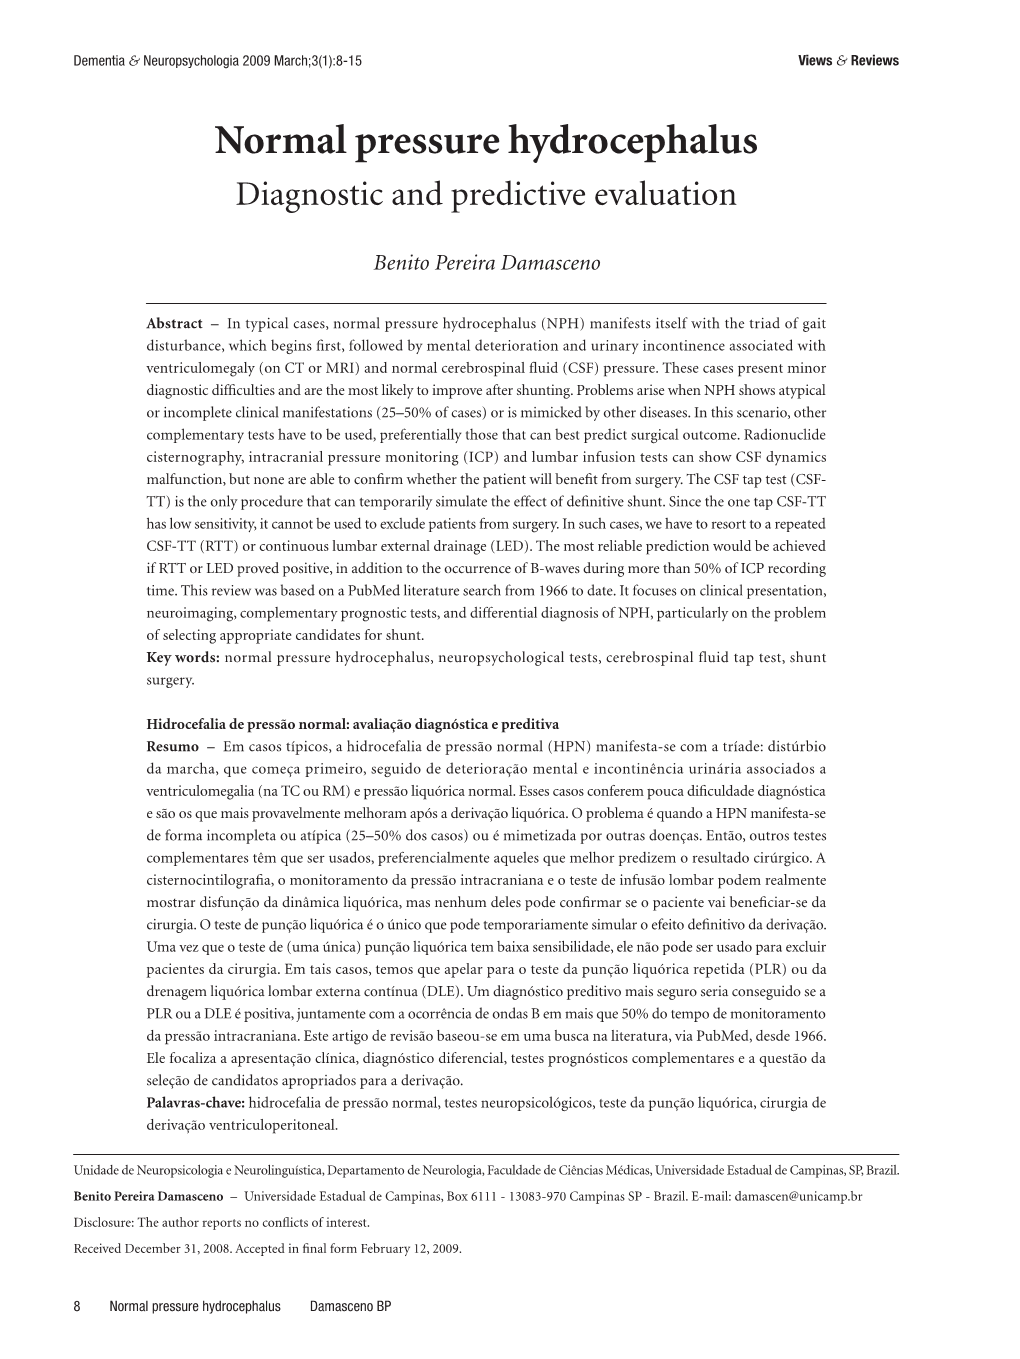 Normal Pressure Hydrocephalus Diagnostic and Predictive Evaluation